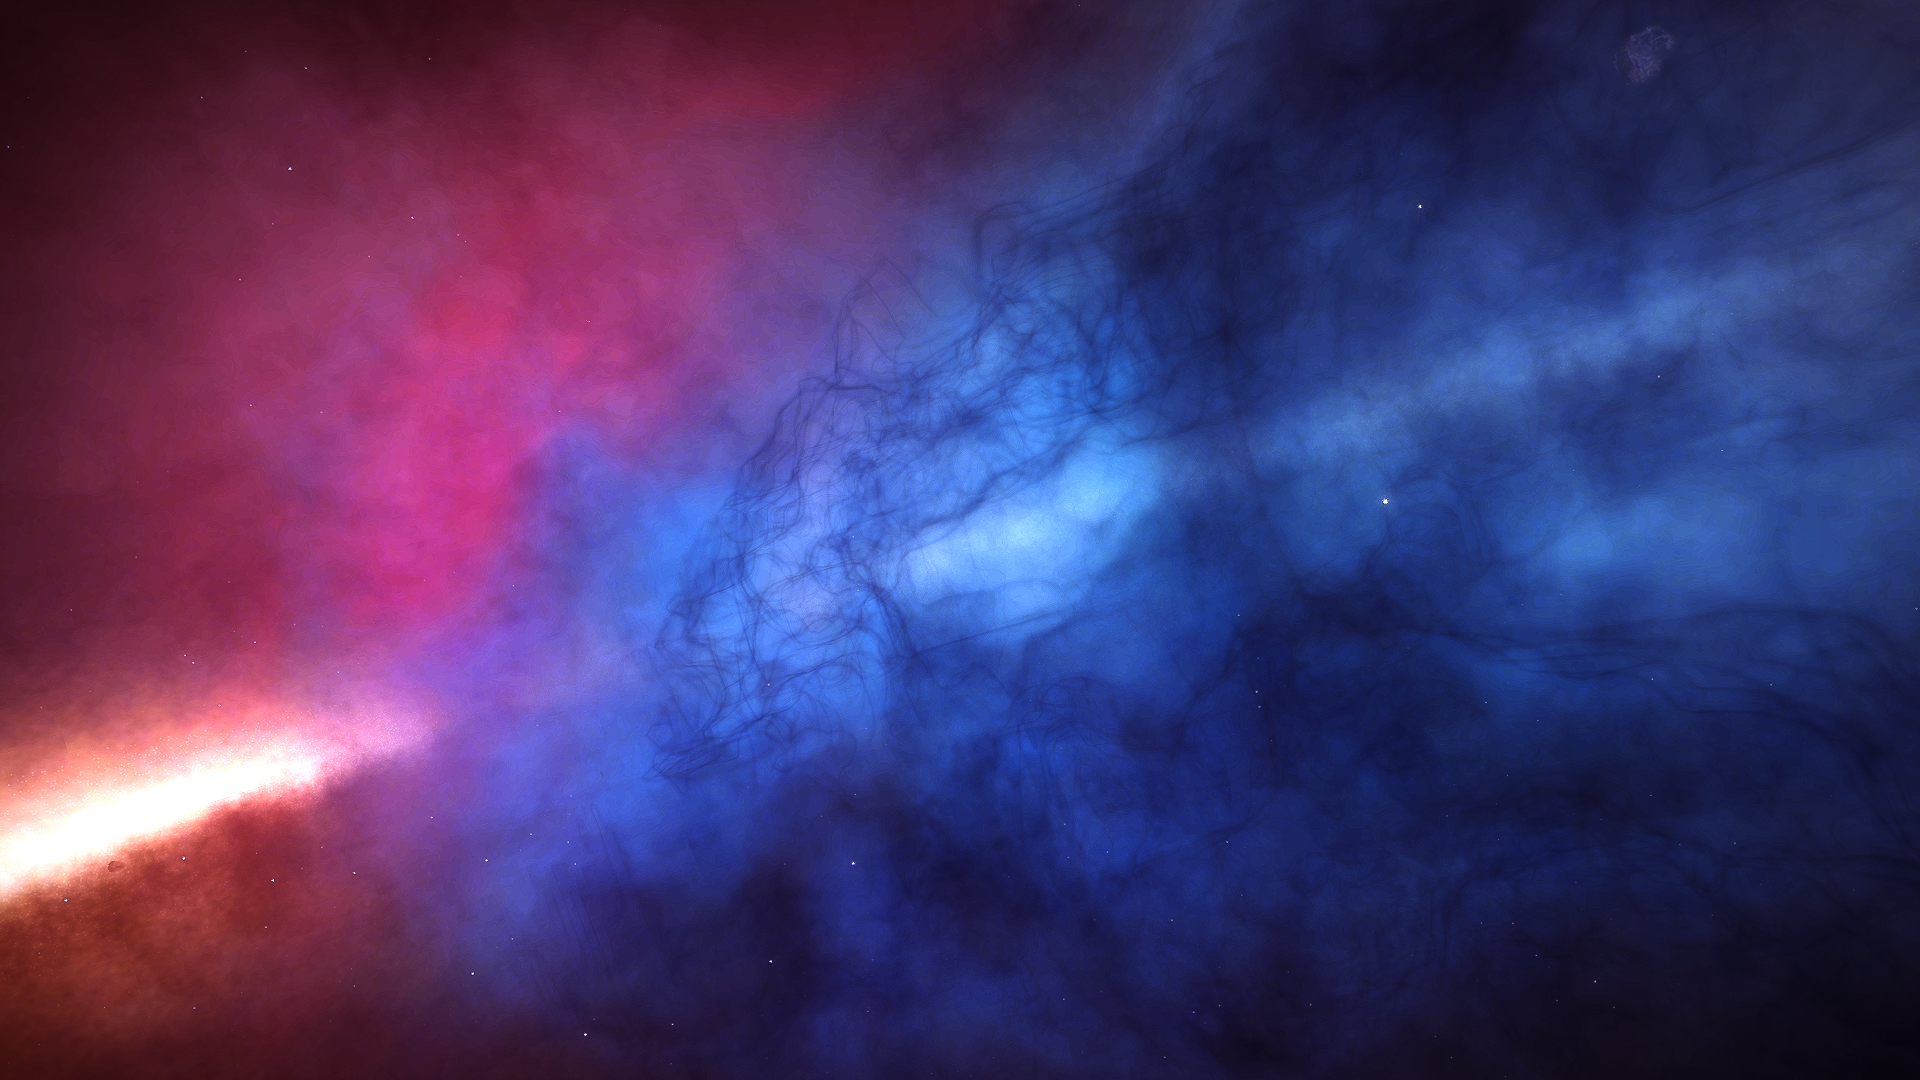 Veil Nebula West is rather stunning